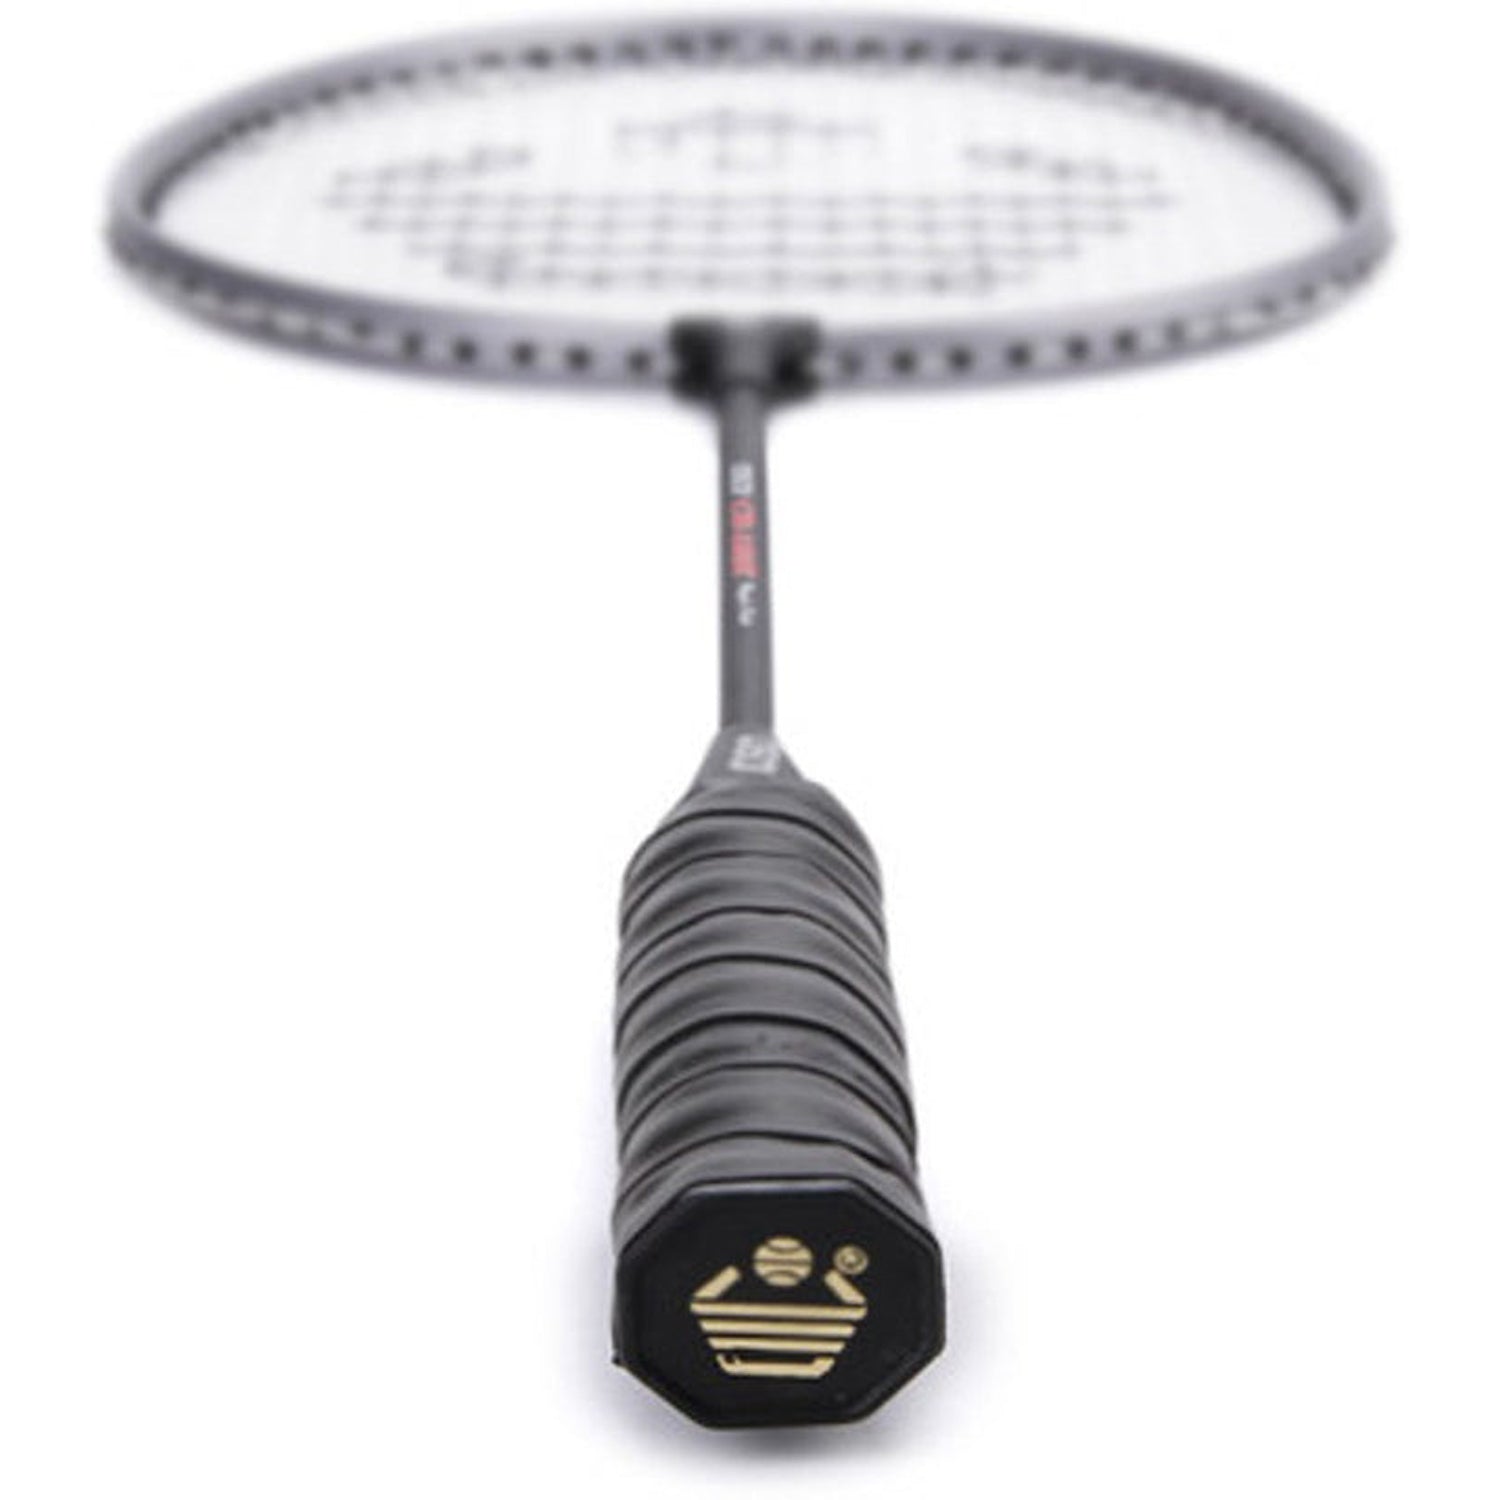 Cosco Cb-150E Badminton Racquet - Best Price online Prokicksports.com